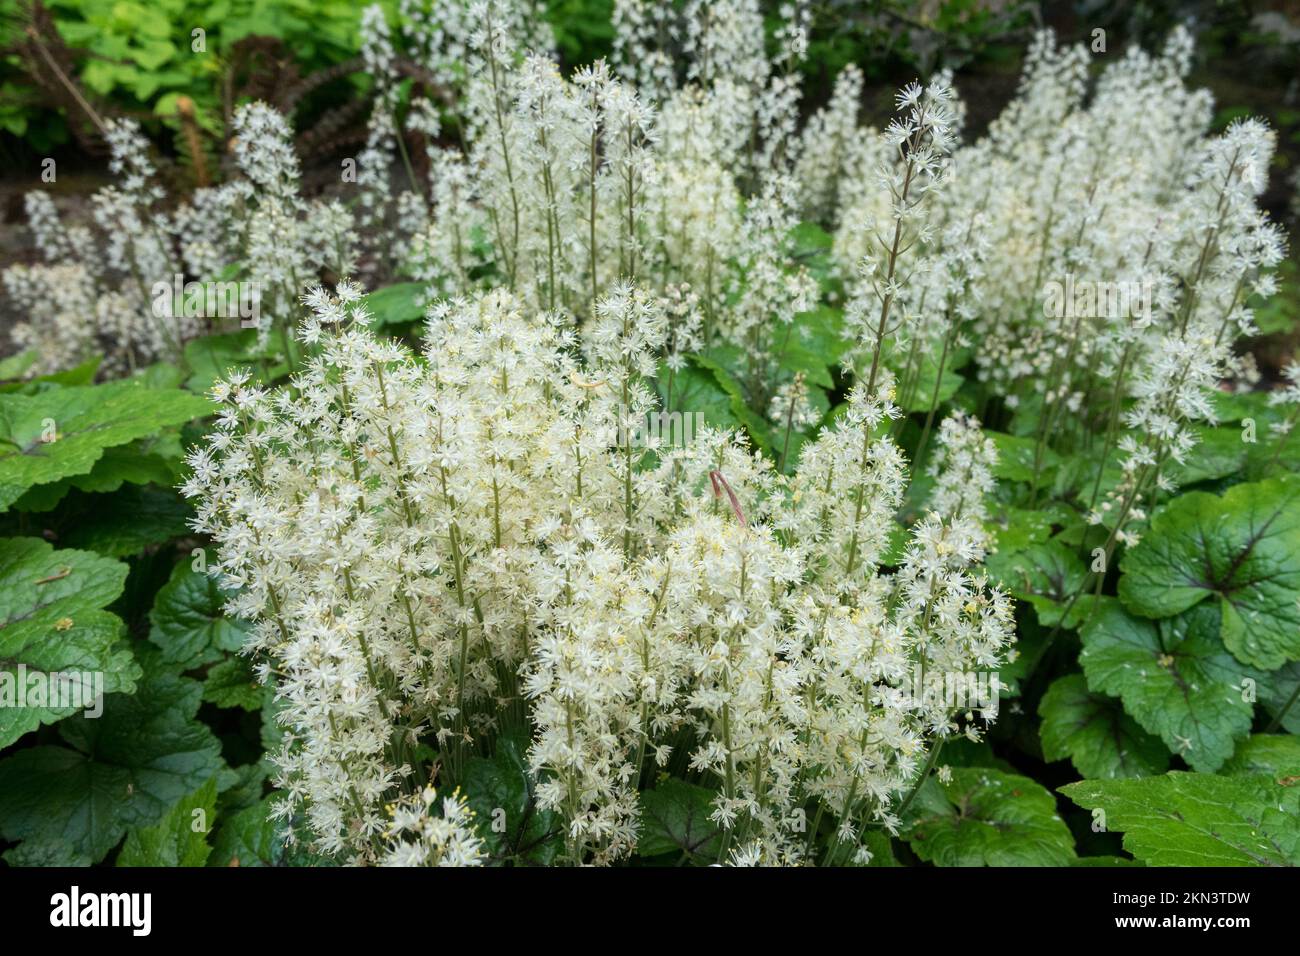 False Mitrewort, Tiarella cordifolia, Tiger Stripe, Allegheny Foamflower Stock Photo